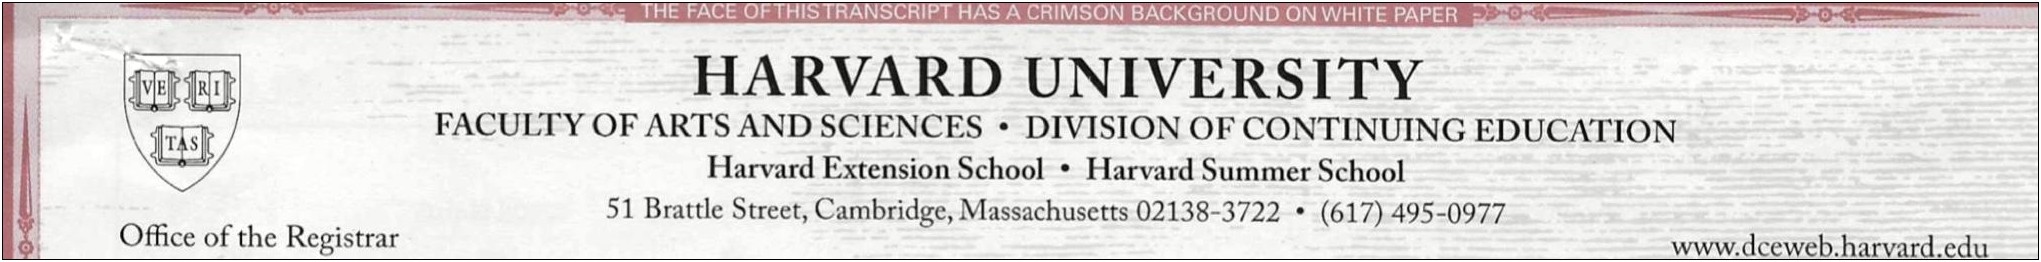 Harvard Extension School Project On Resume